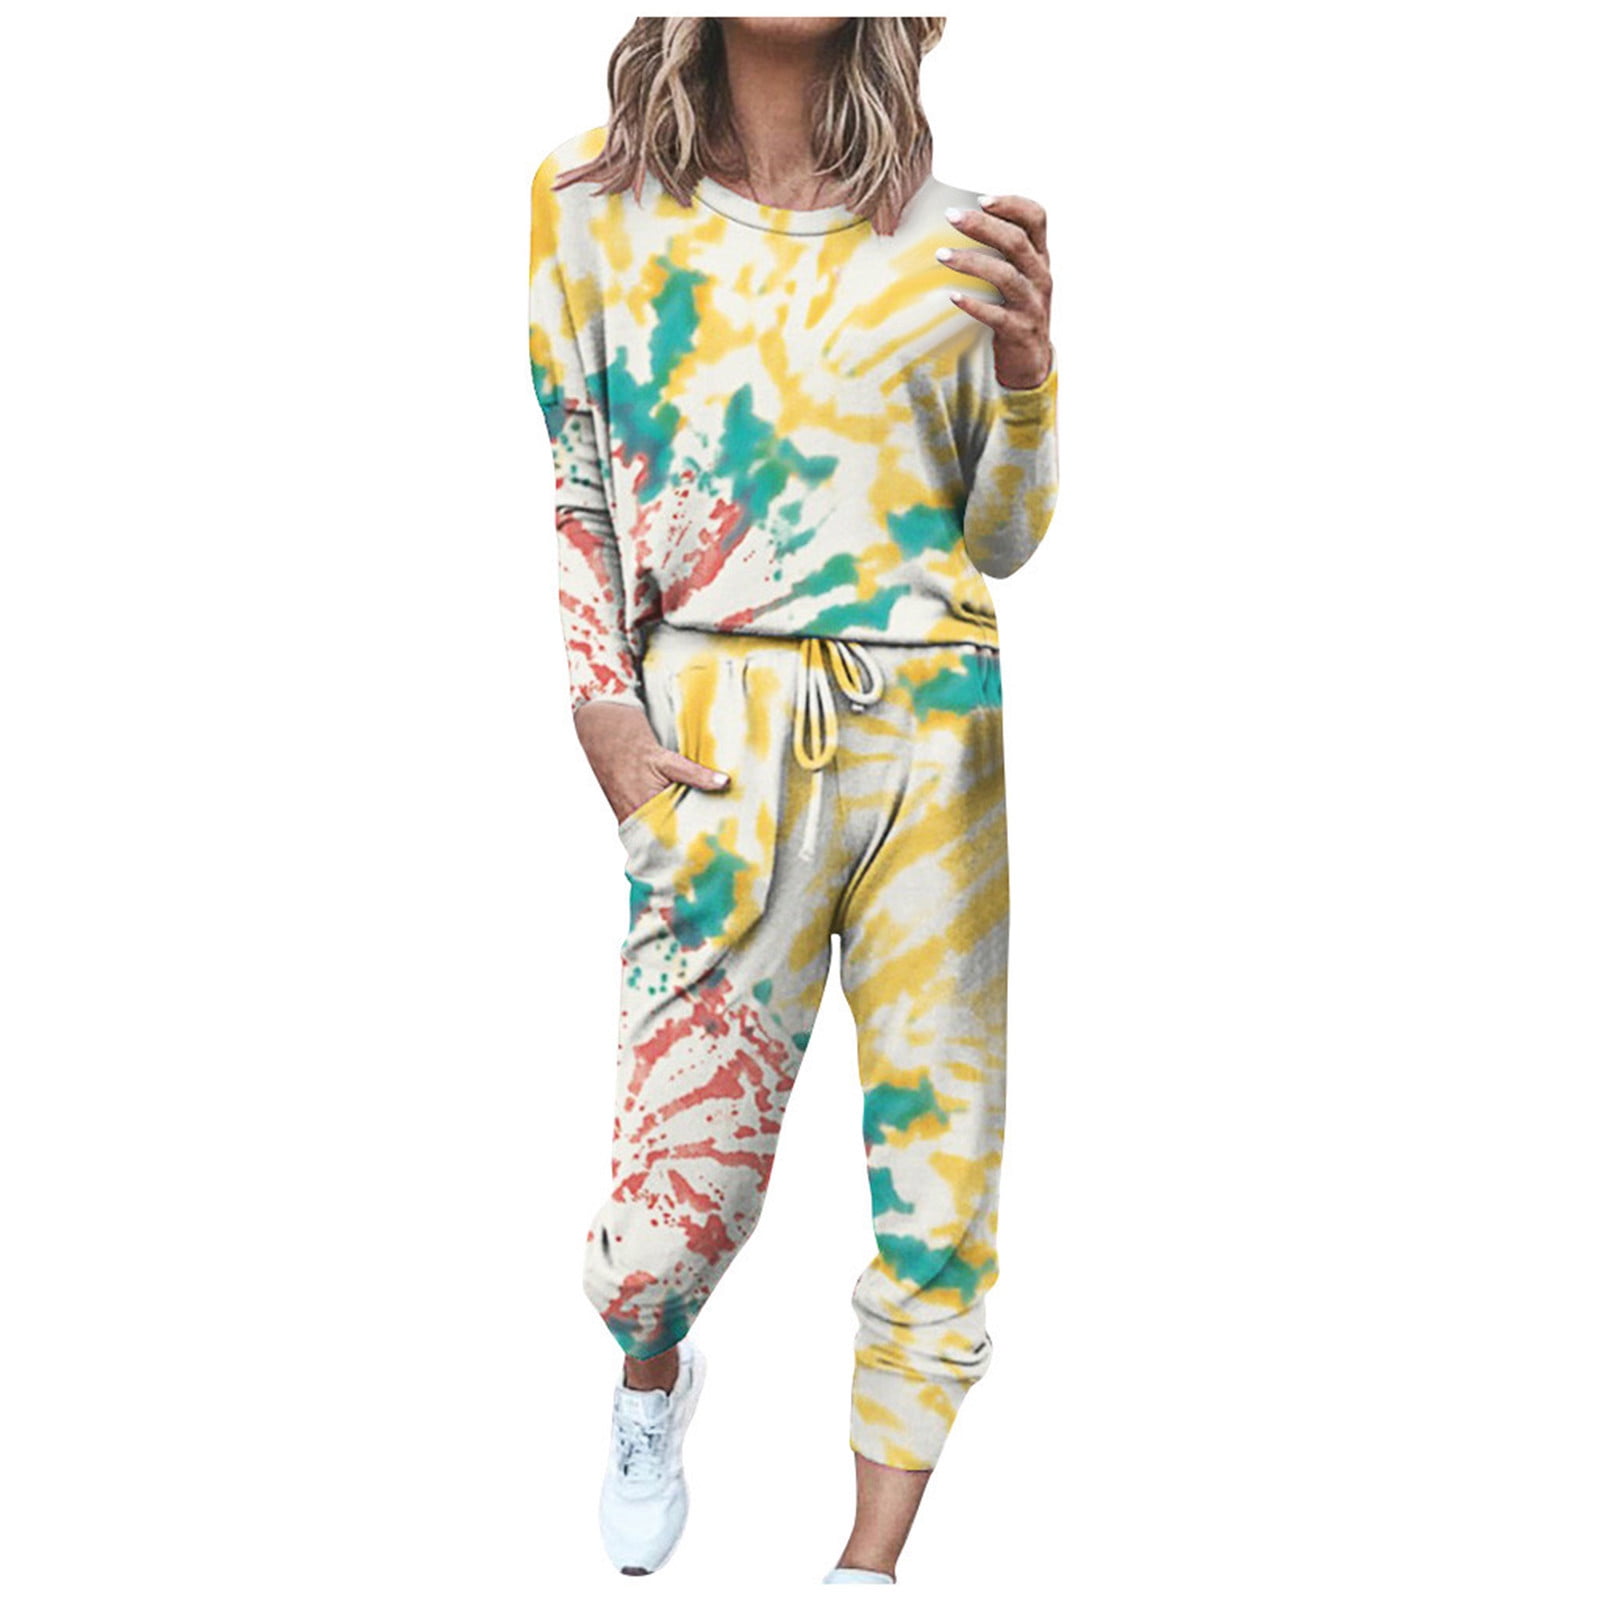 Shorts Set Casual Beach Loungewear Details about   Women Tie-Dye Tracksuit Long Sleeve Tops